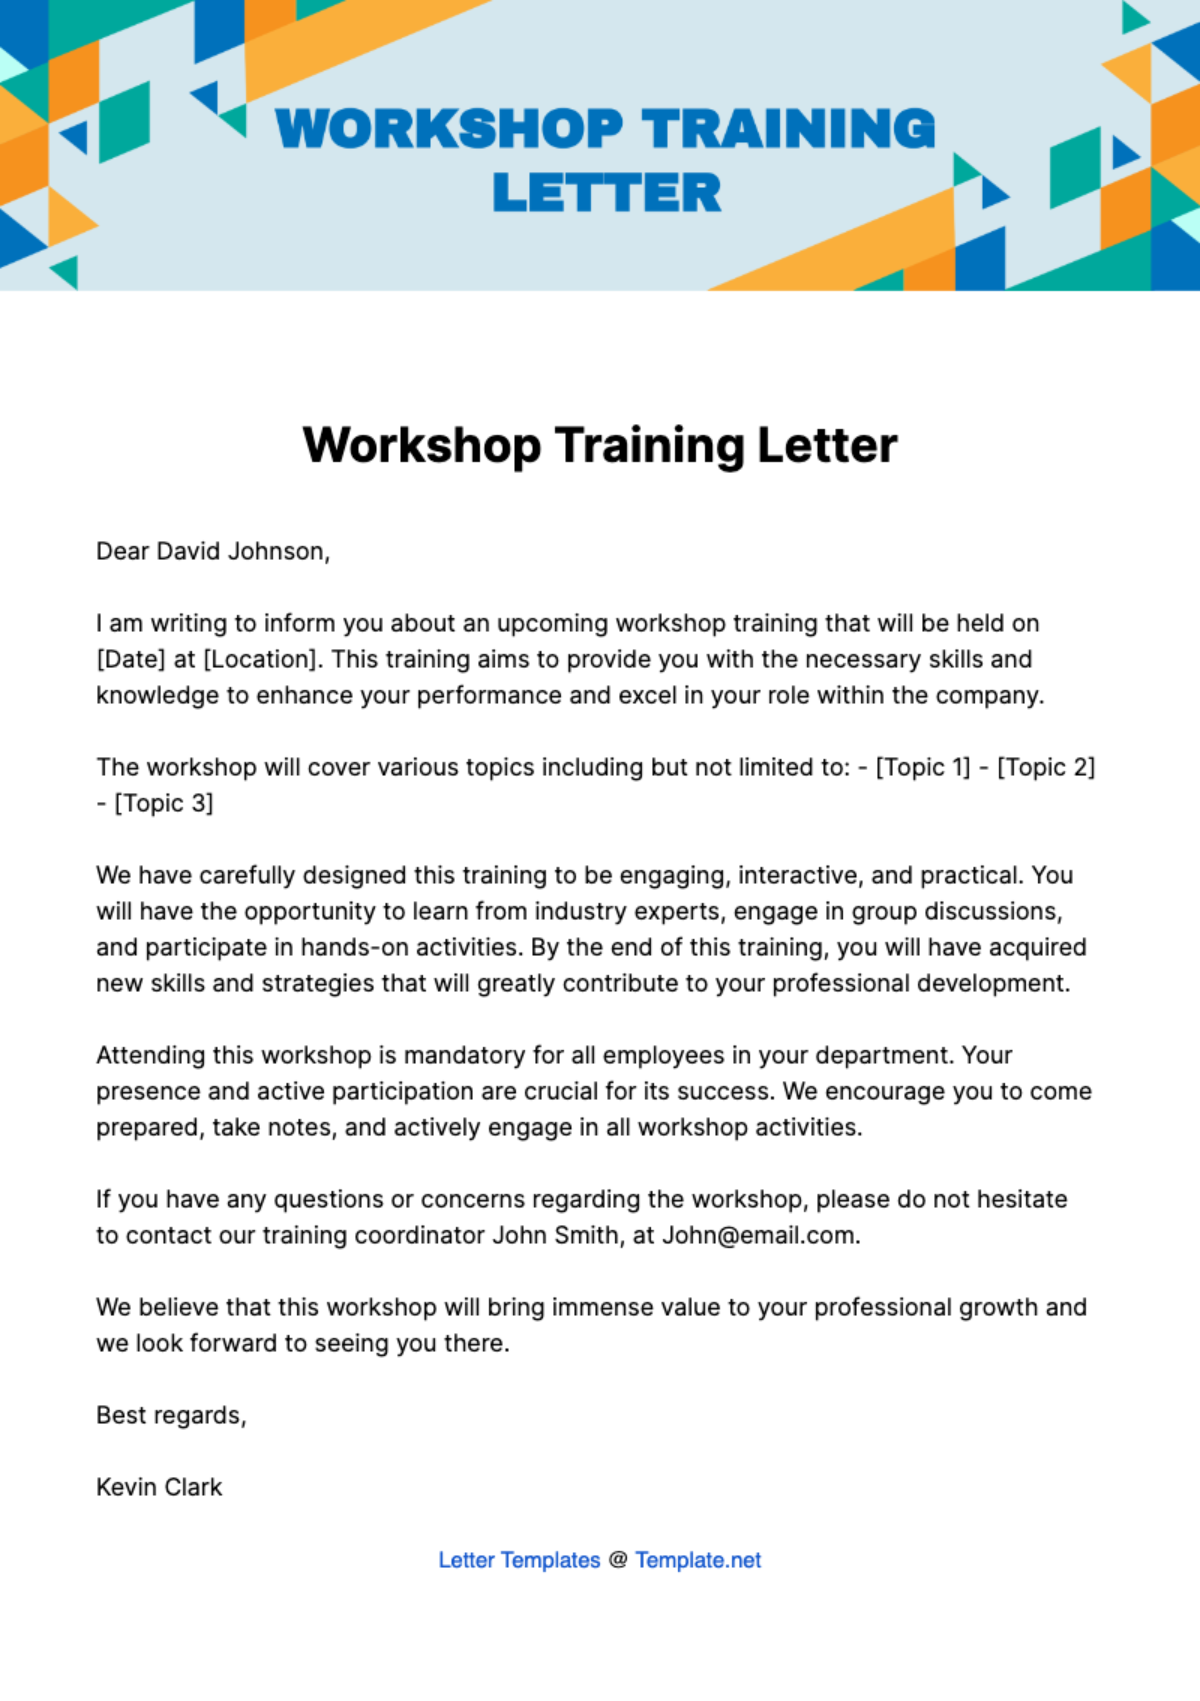 Free Workshop Training Letter Template